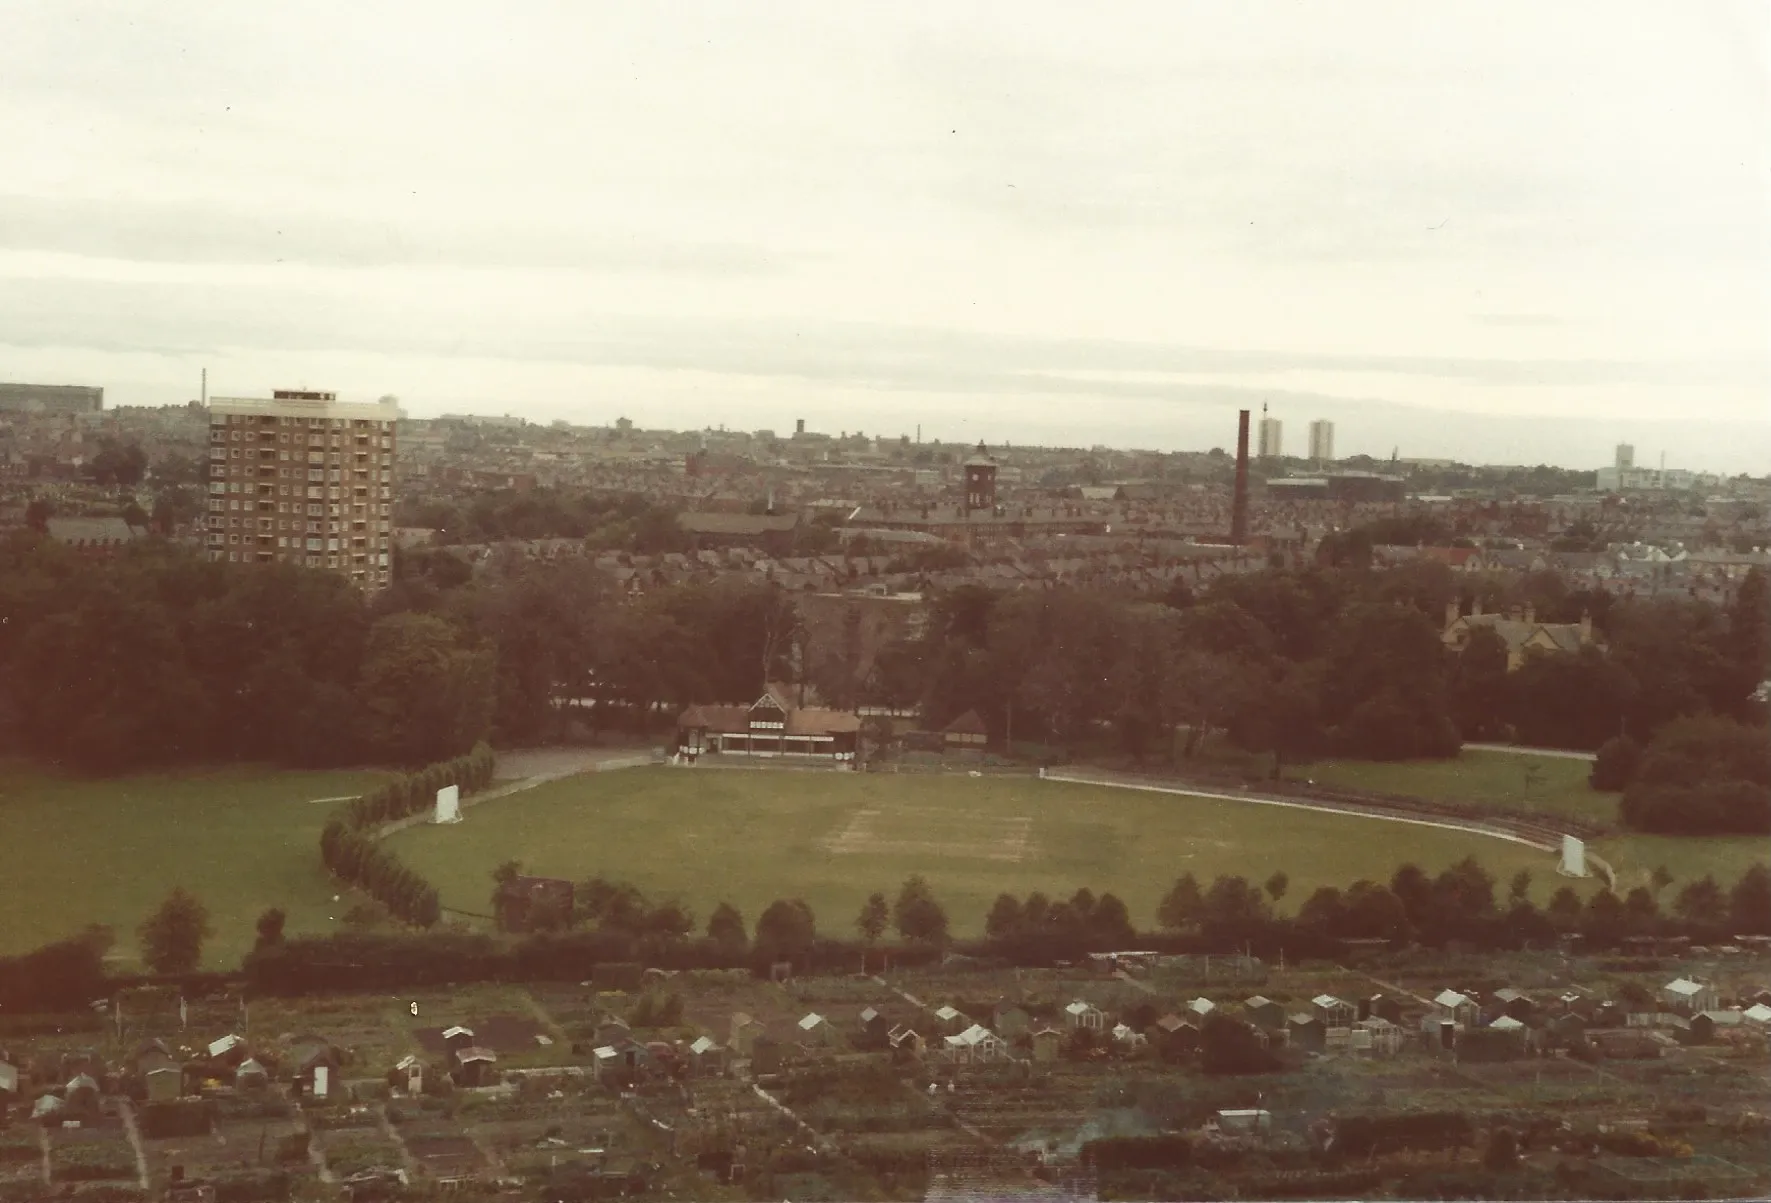 Sefton Cricket ground and Rutland House taken in 1985